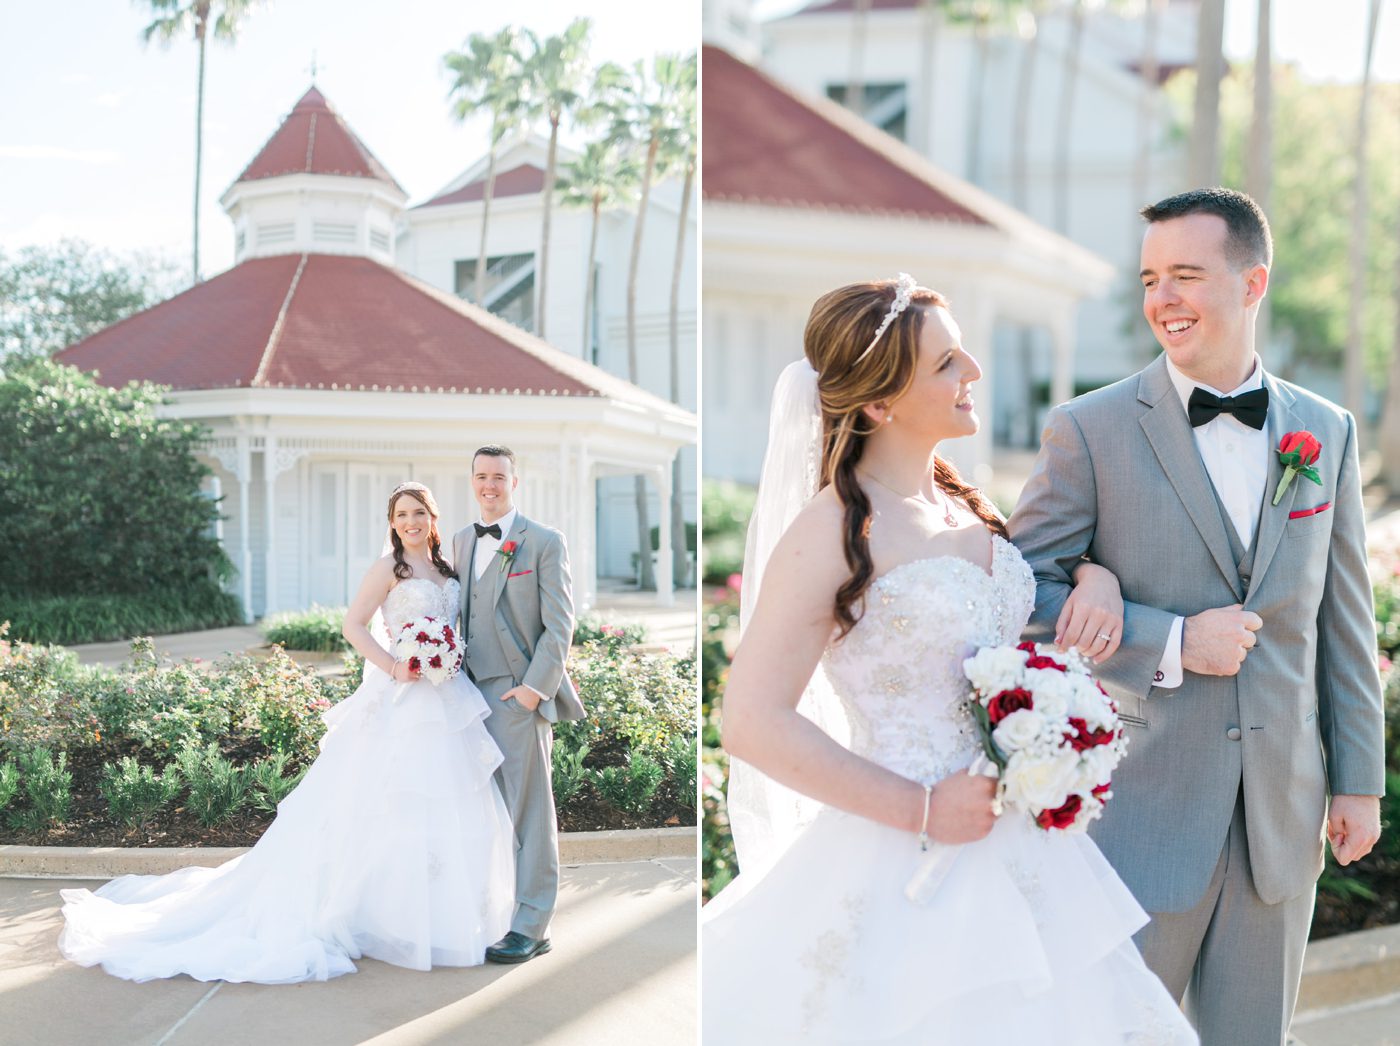 Grand Floridian wedding photos by Catherine Ann Photography